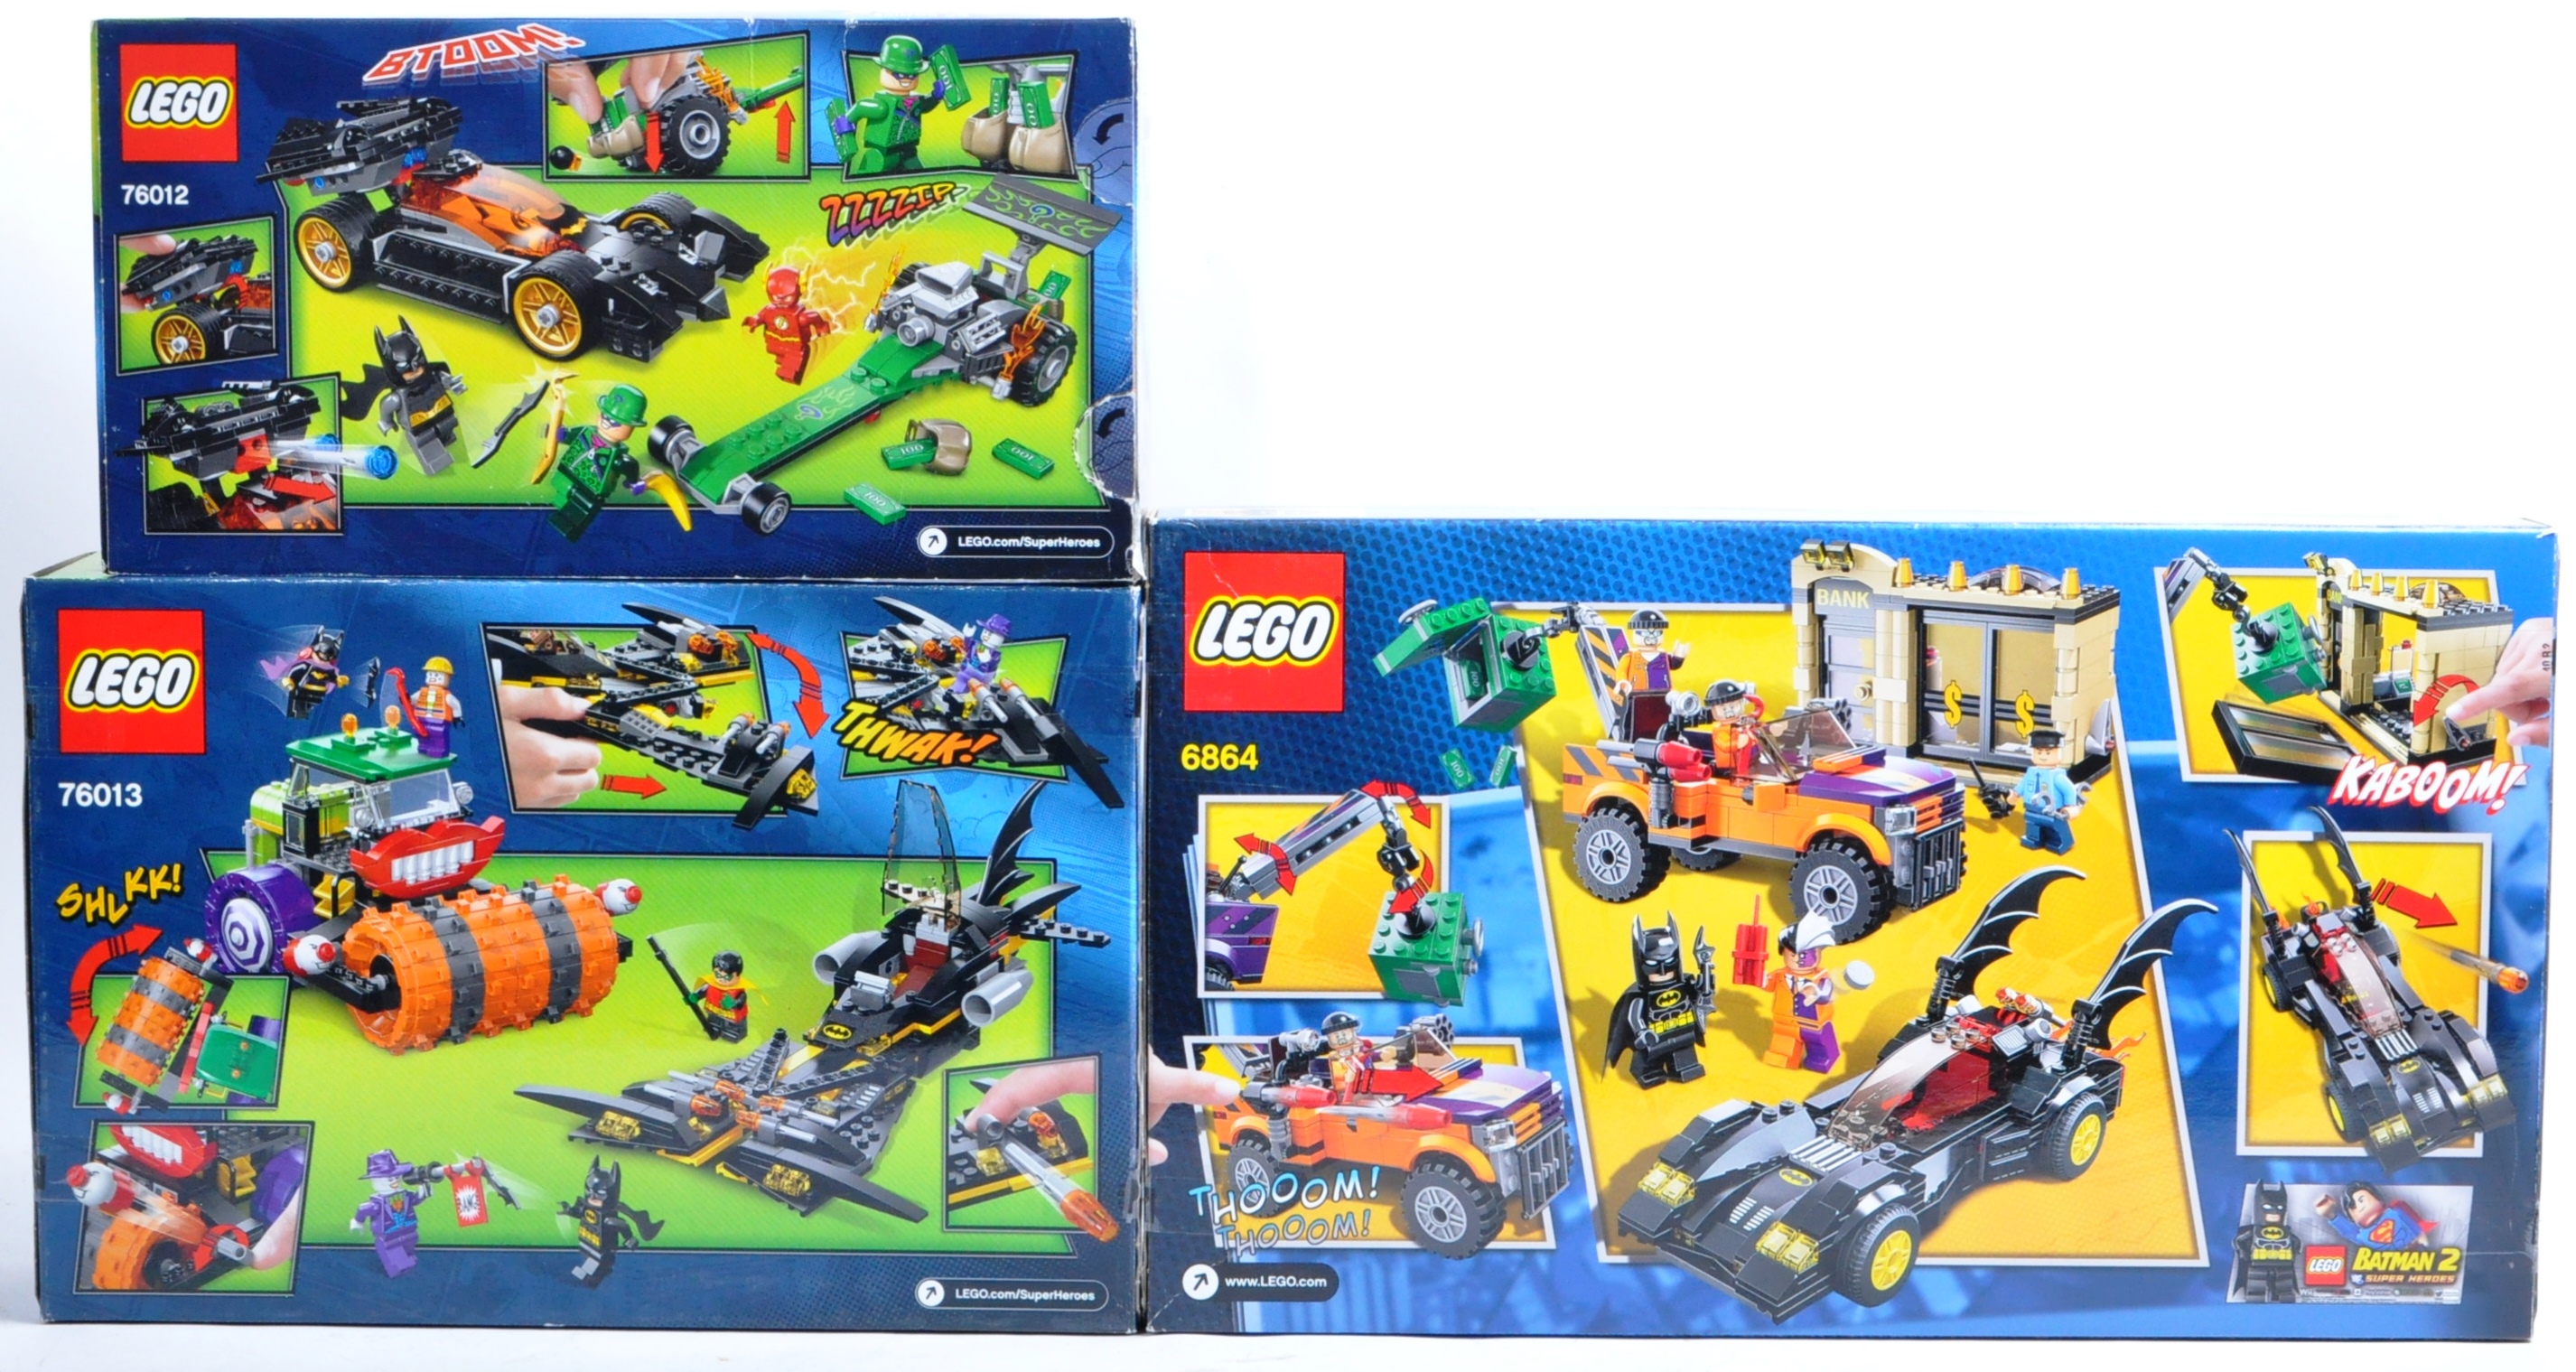 LEGO SETS - LEGO DC COMICS SUPERHEROES - 6864 / 76012 / 76013 - Image 5 of 7